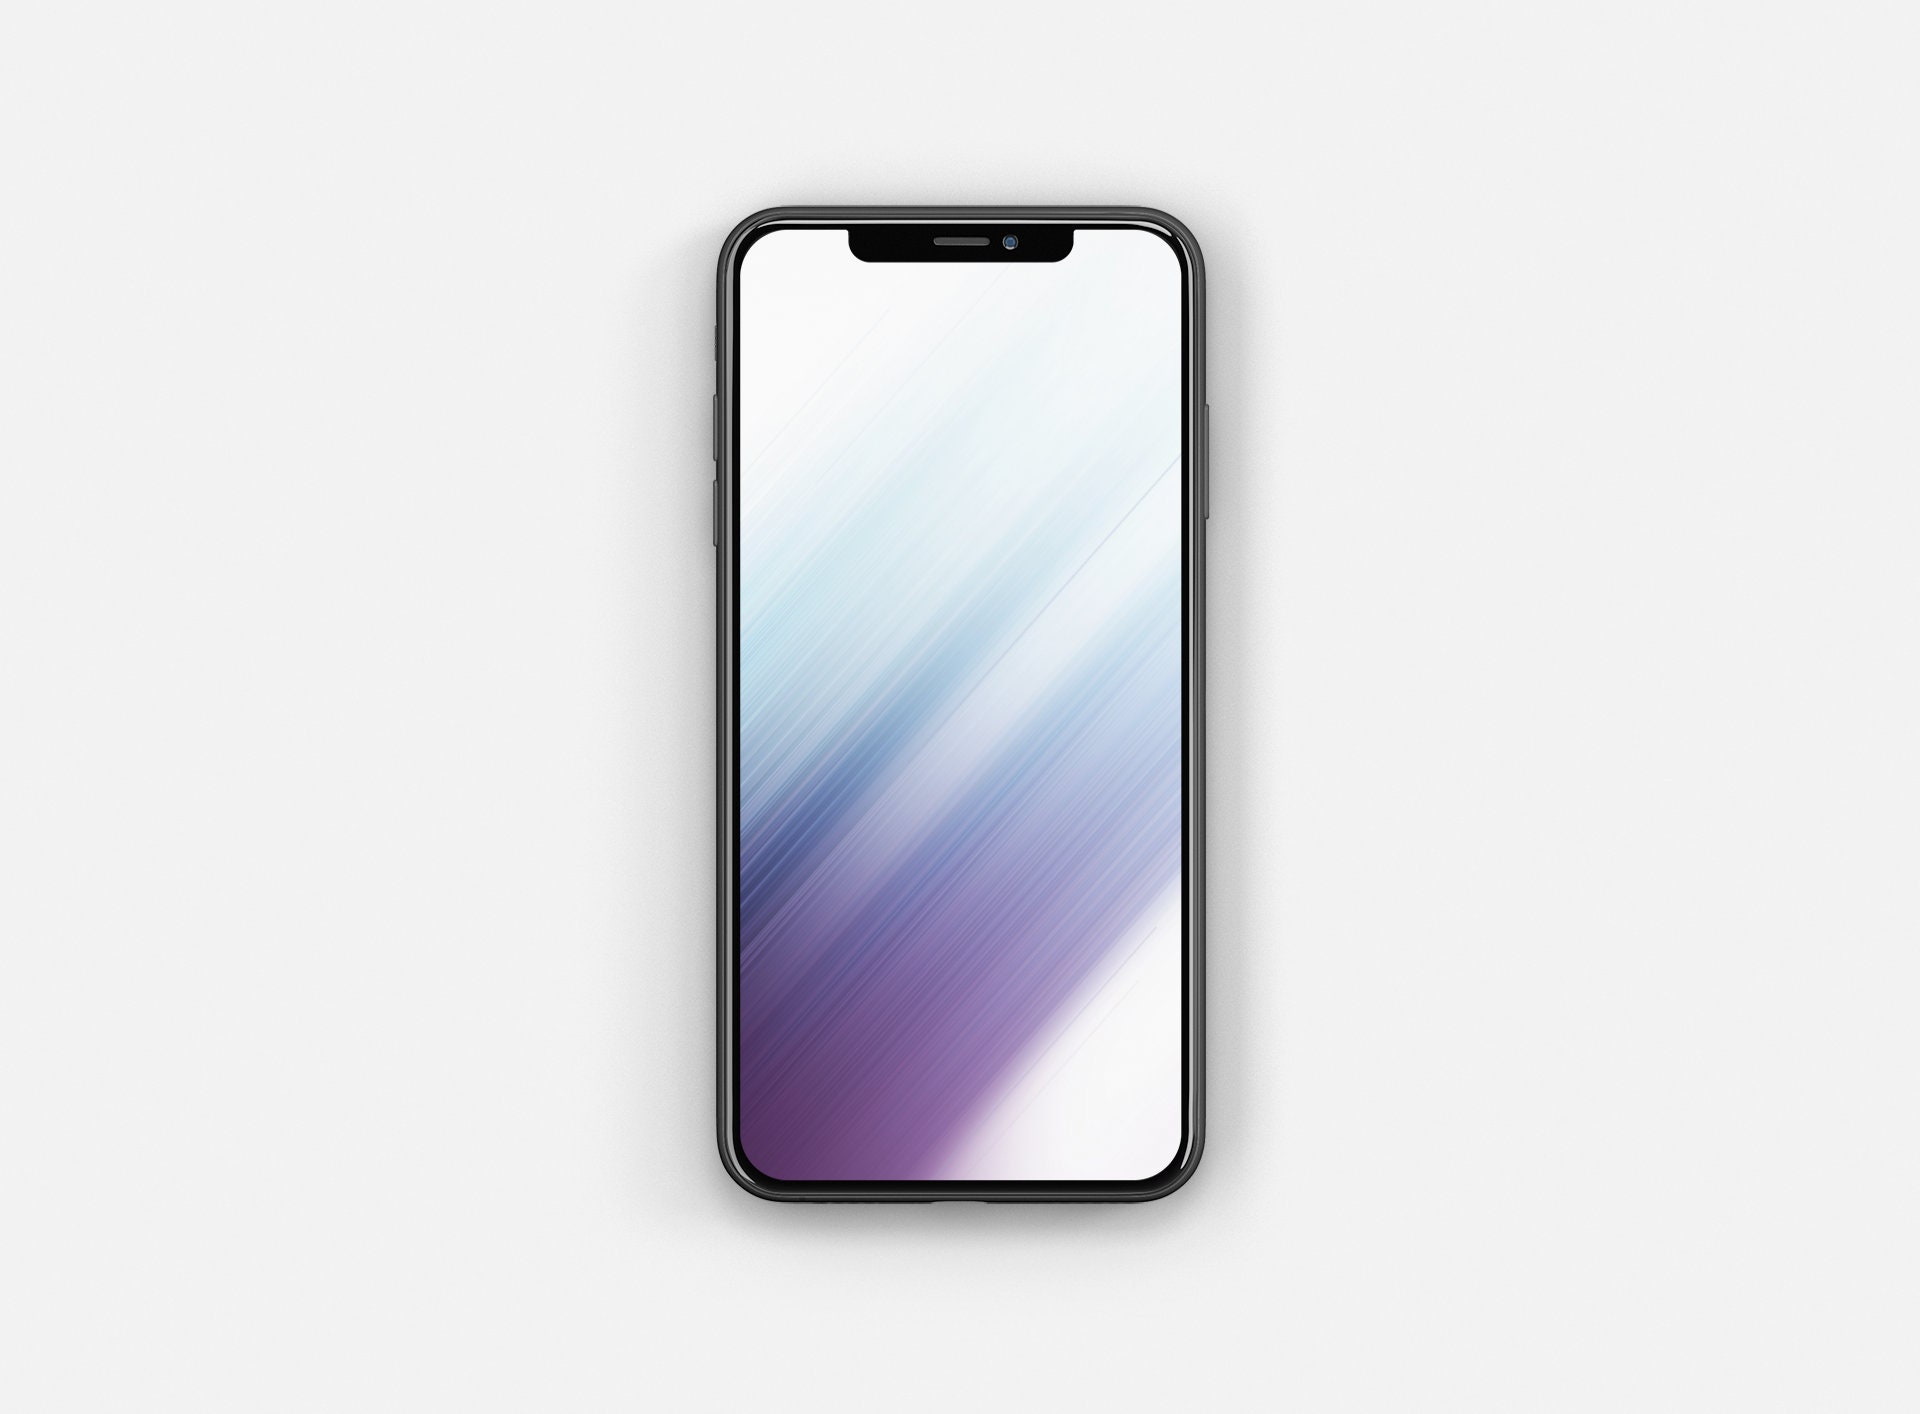 Lv marble purple lockscreen wallpaper iphone